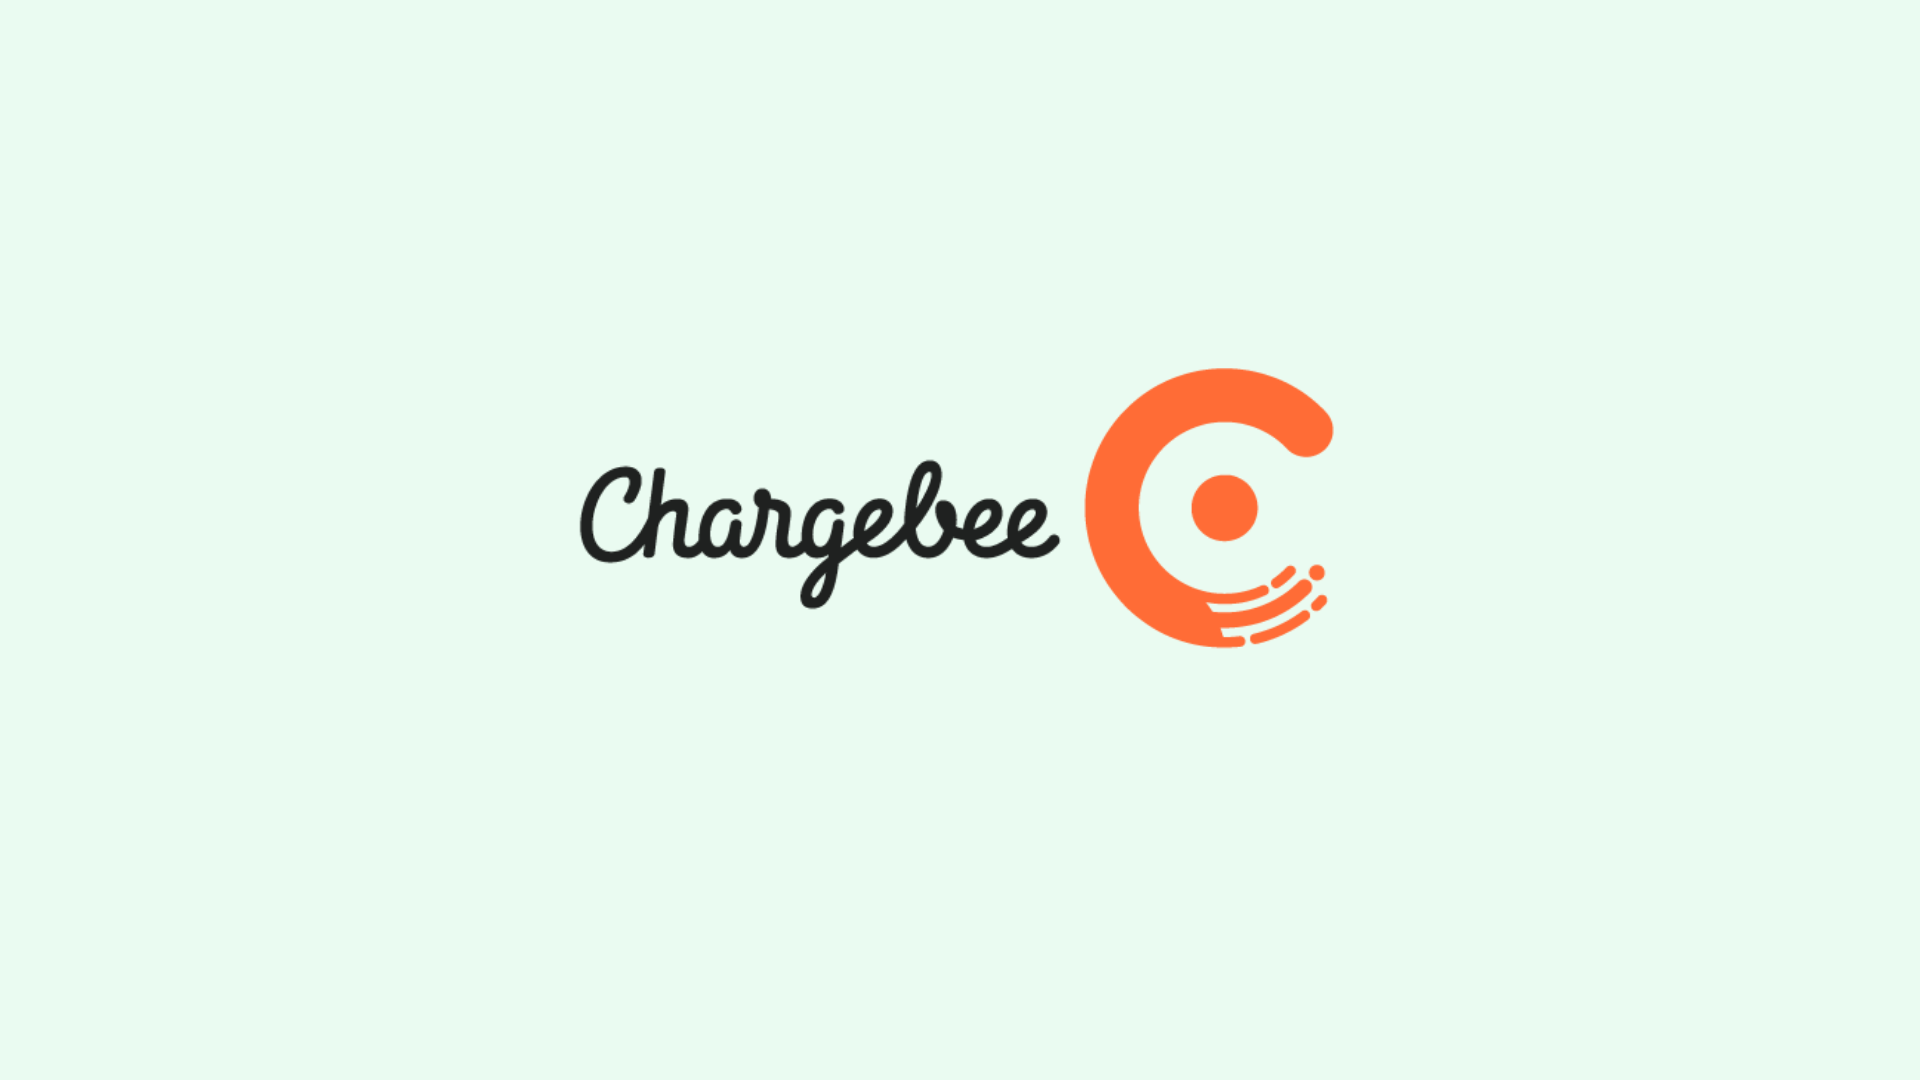 Chargebee logo animation by Gopi Krishna on Dribbble